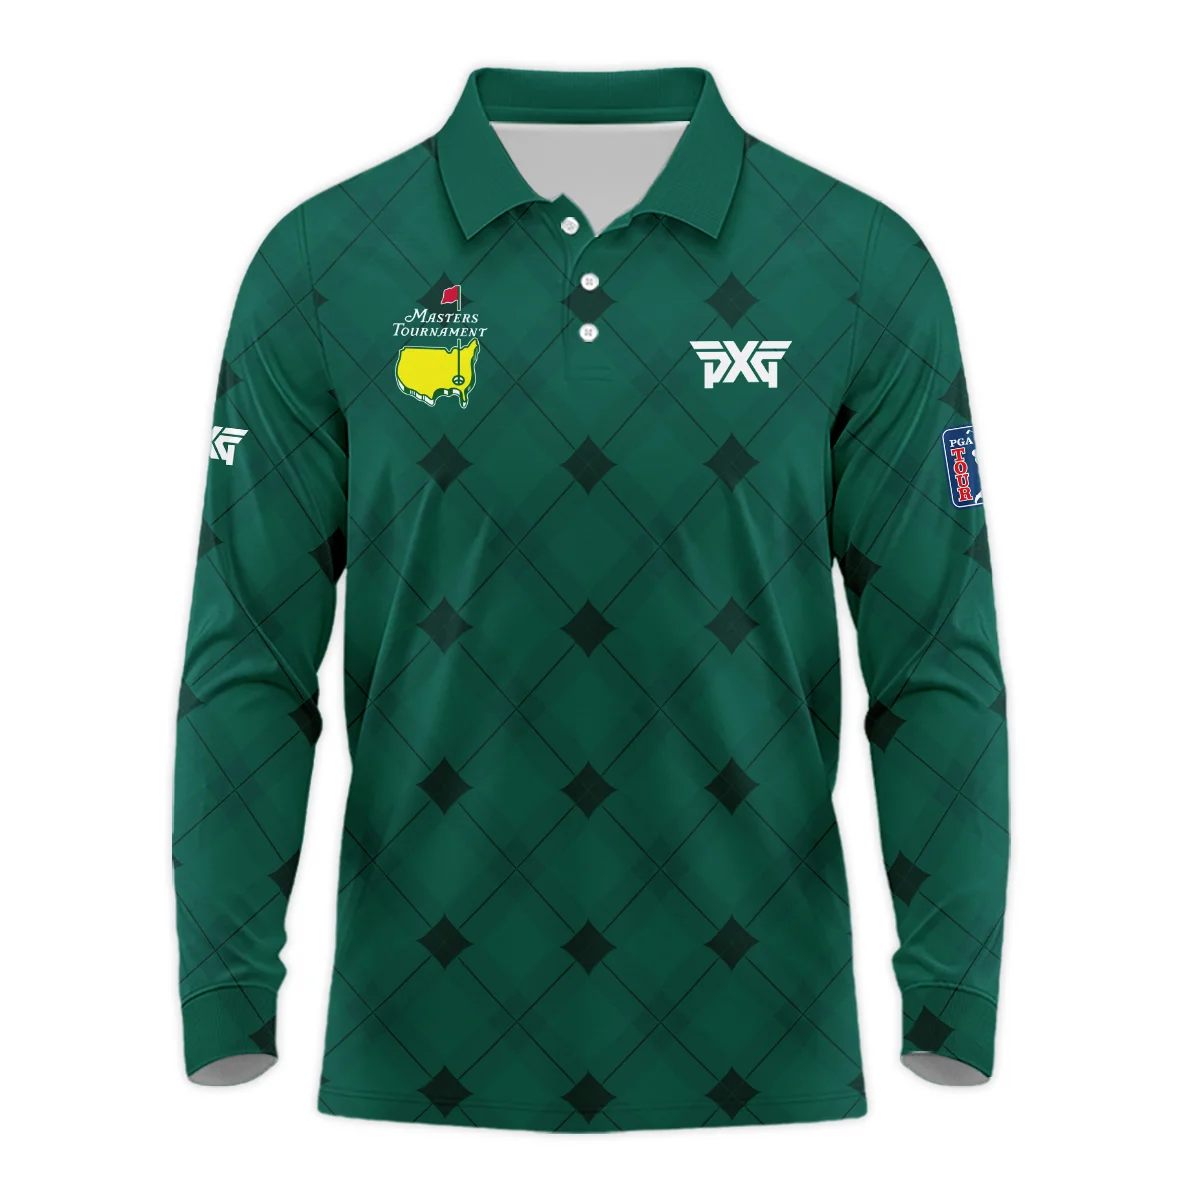 Golf Masters Tournament Green Argyle Pattern Unisex T-Shirt Style Classic T-Shirt